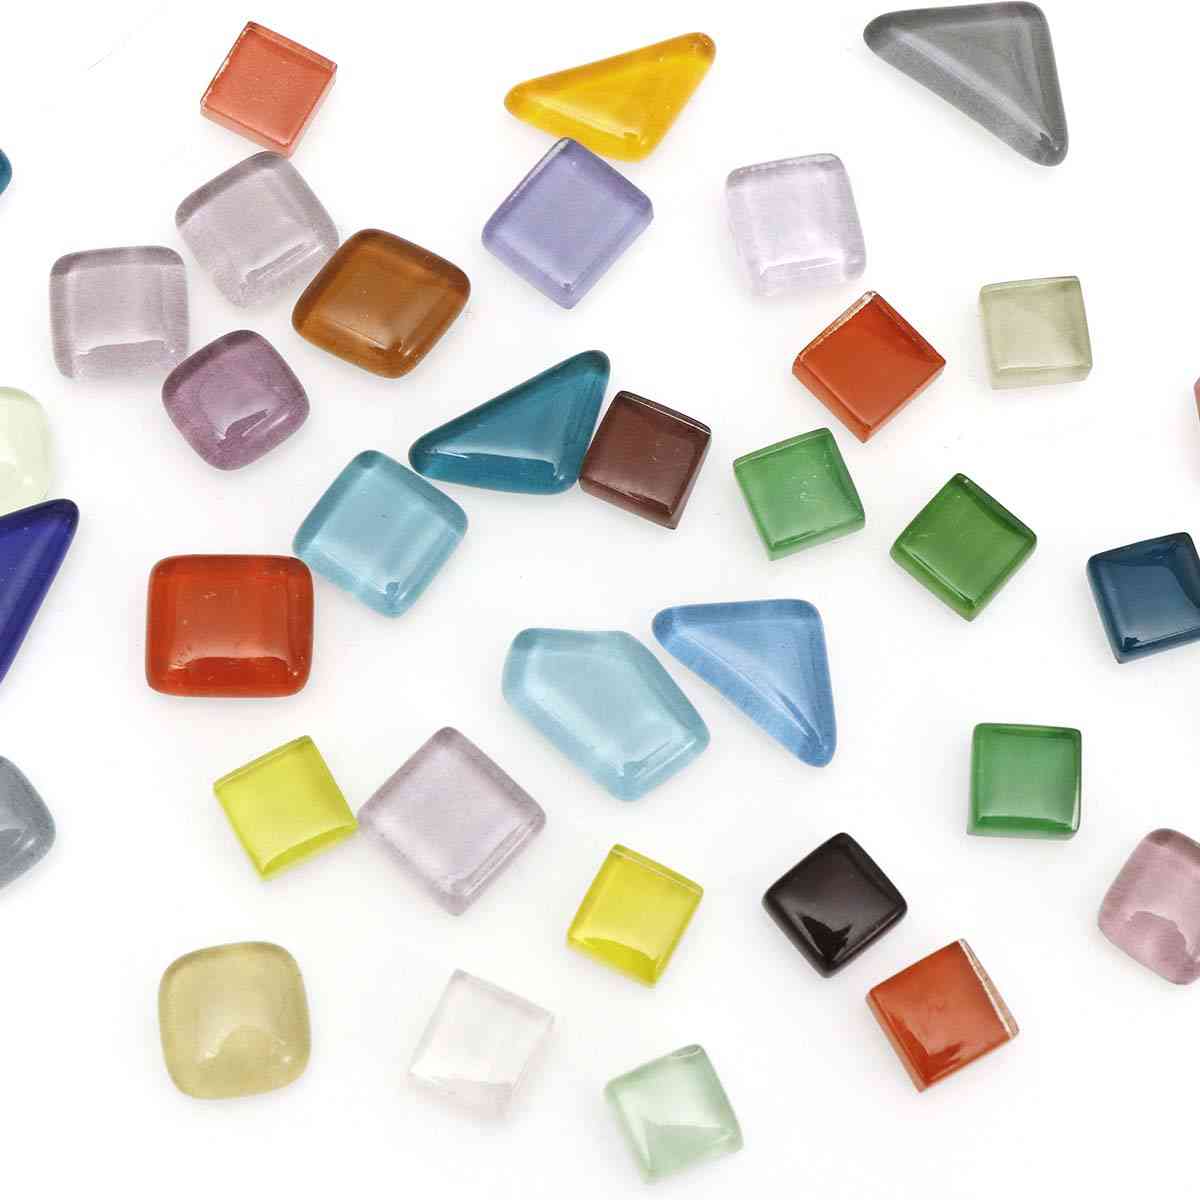 Geometric Figures Mini Crystal Mosaic Glass Tiles